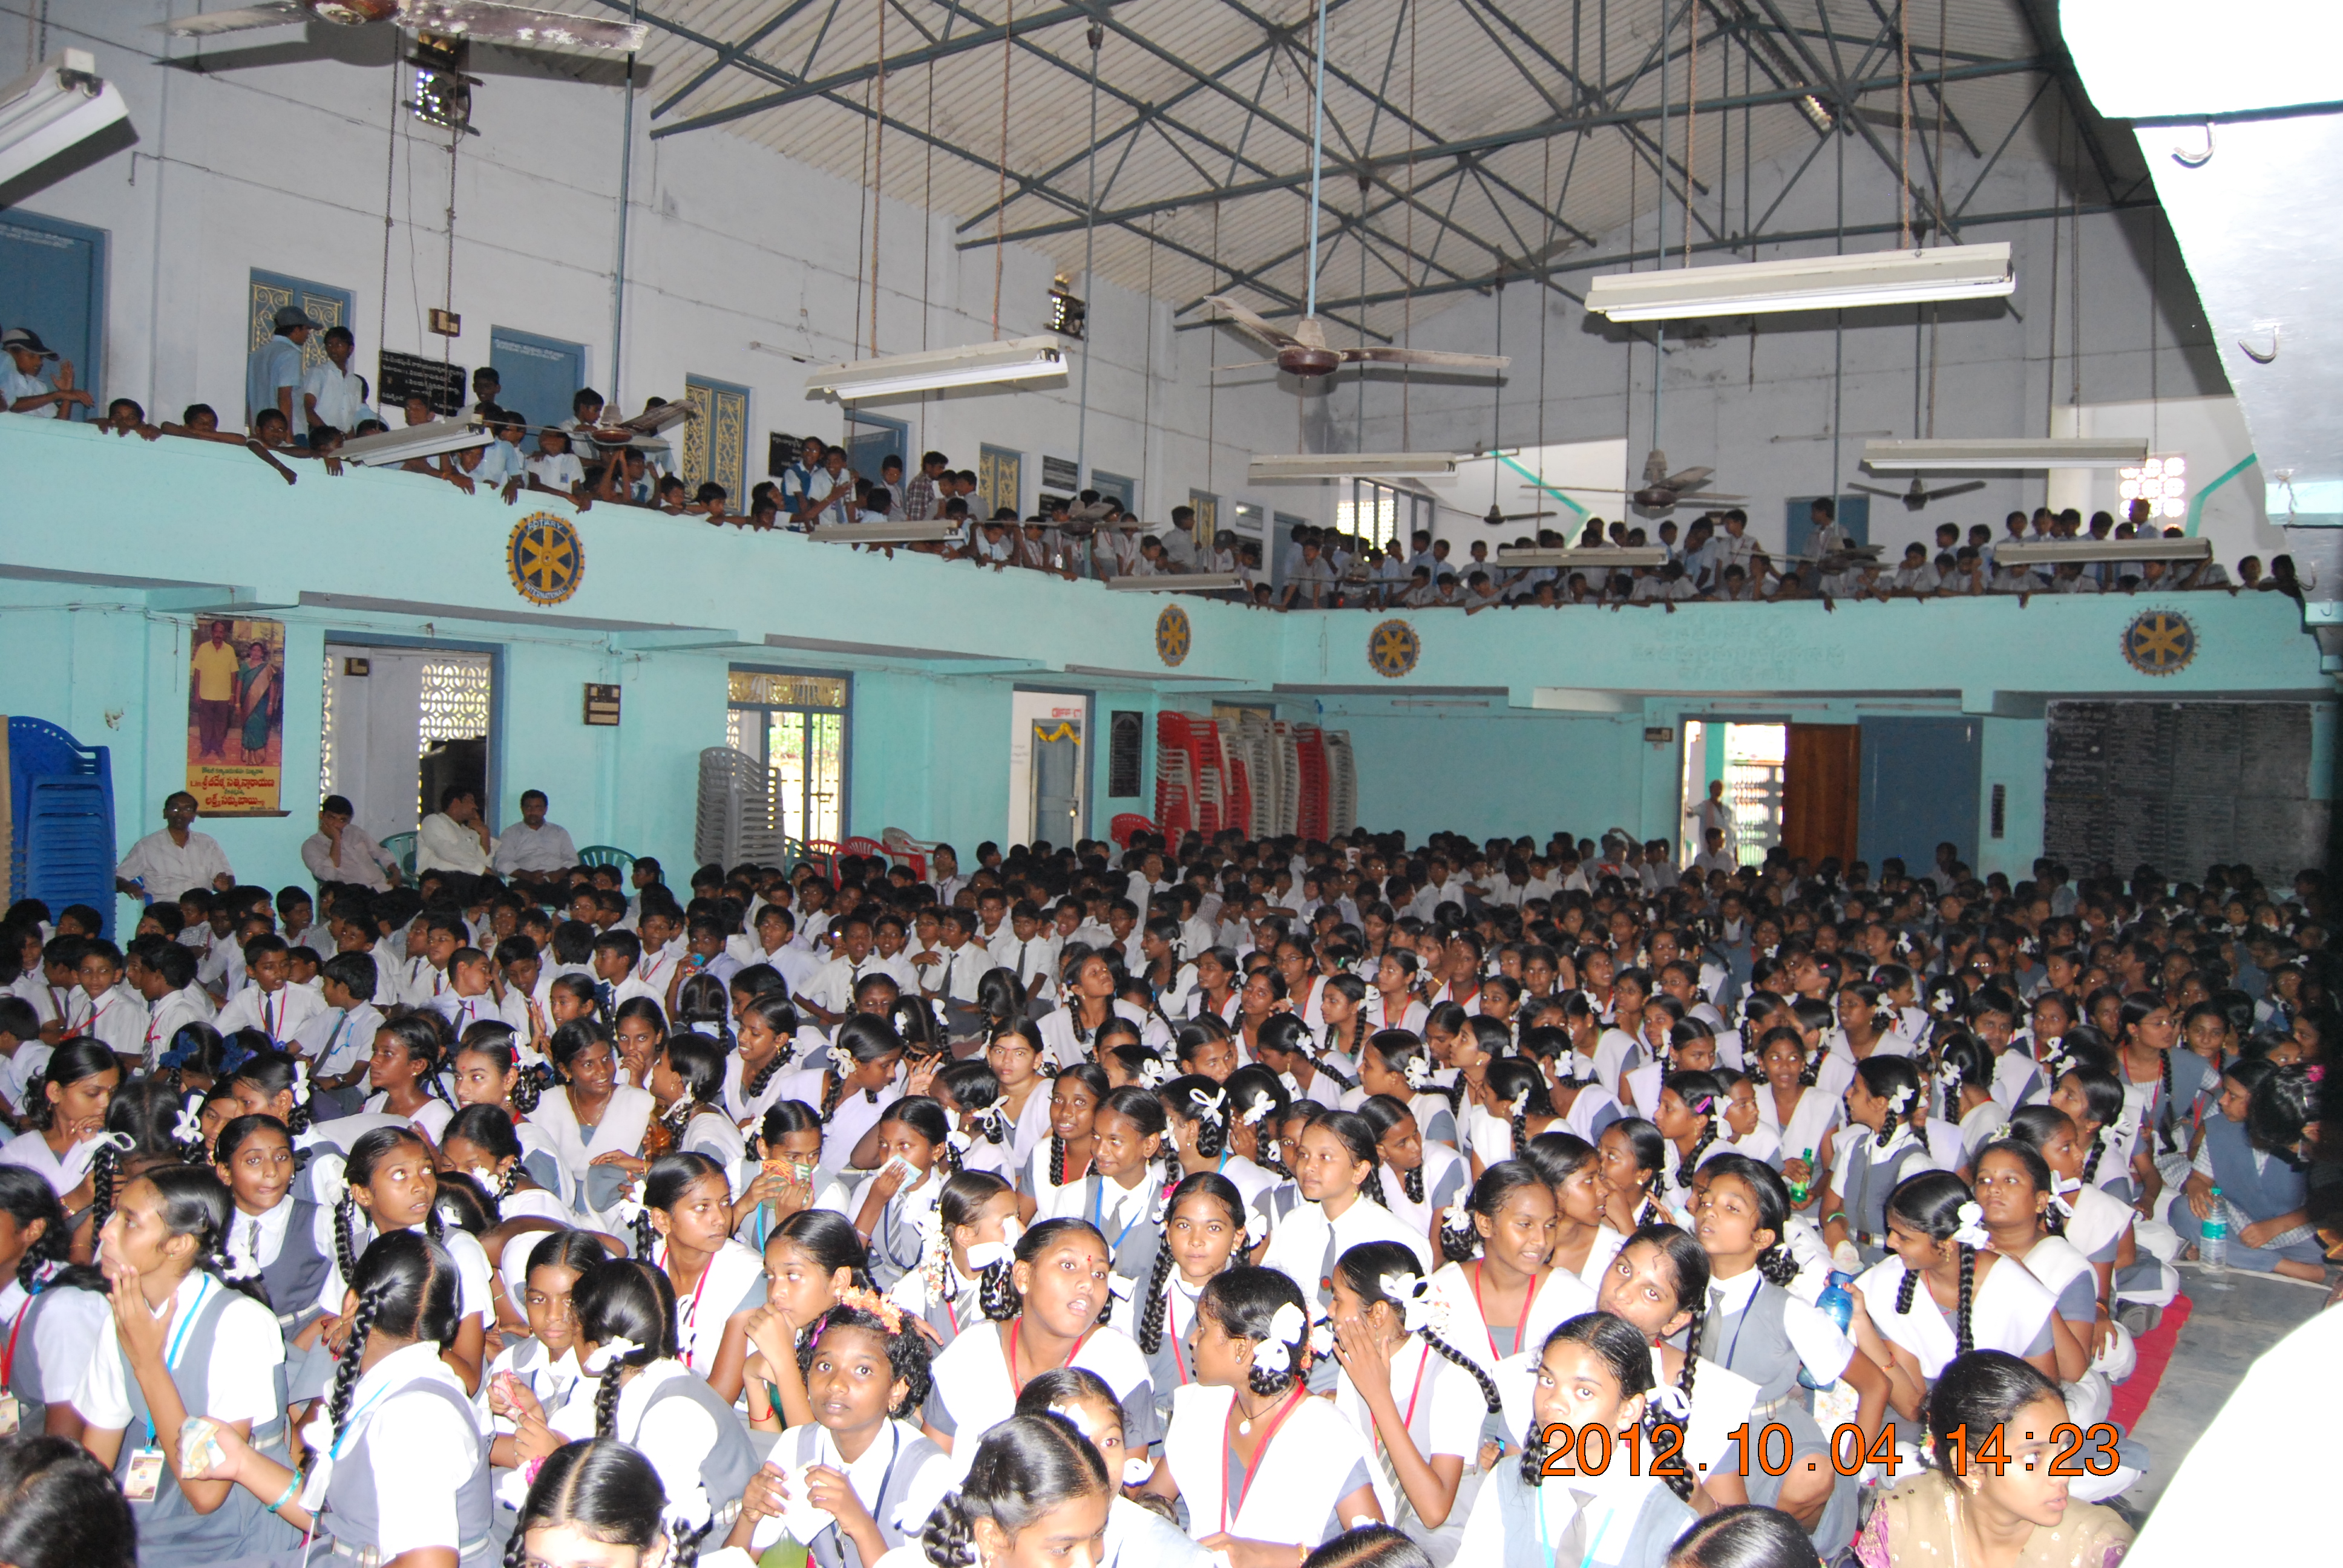 School children gathered in the rotary auditorium